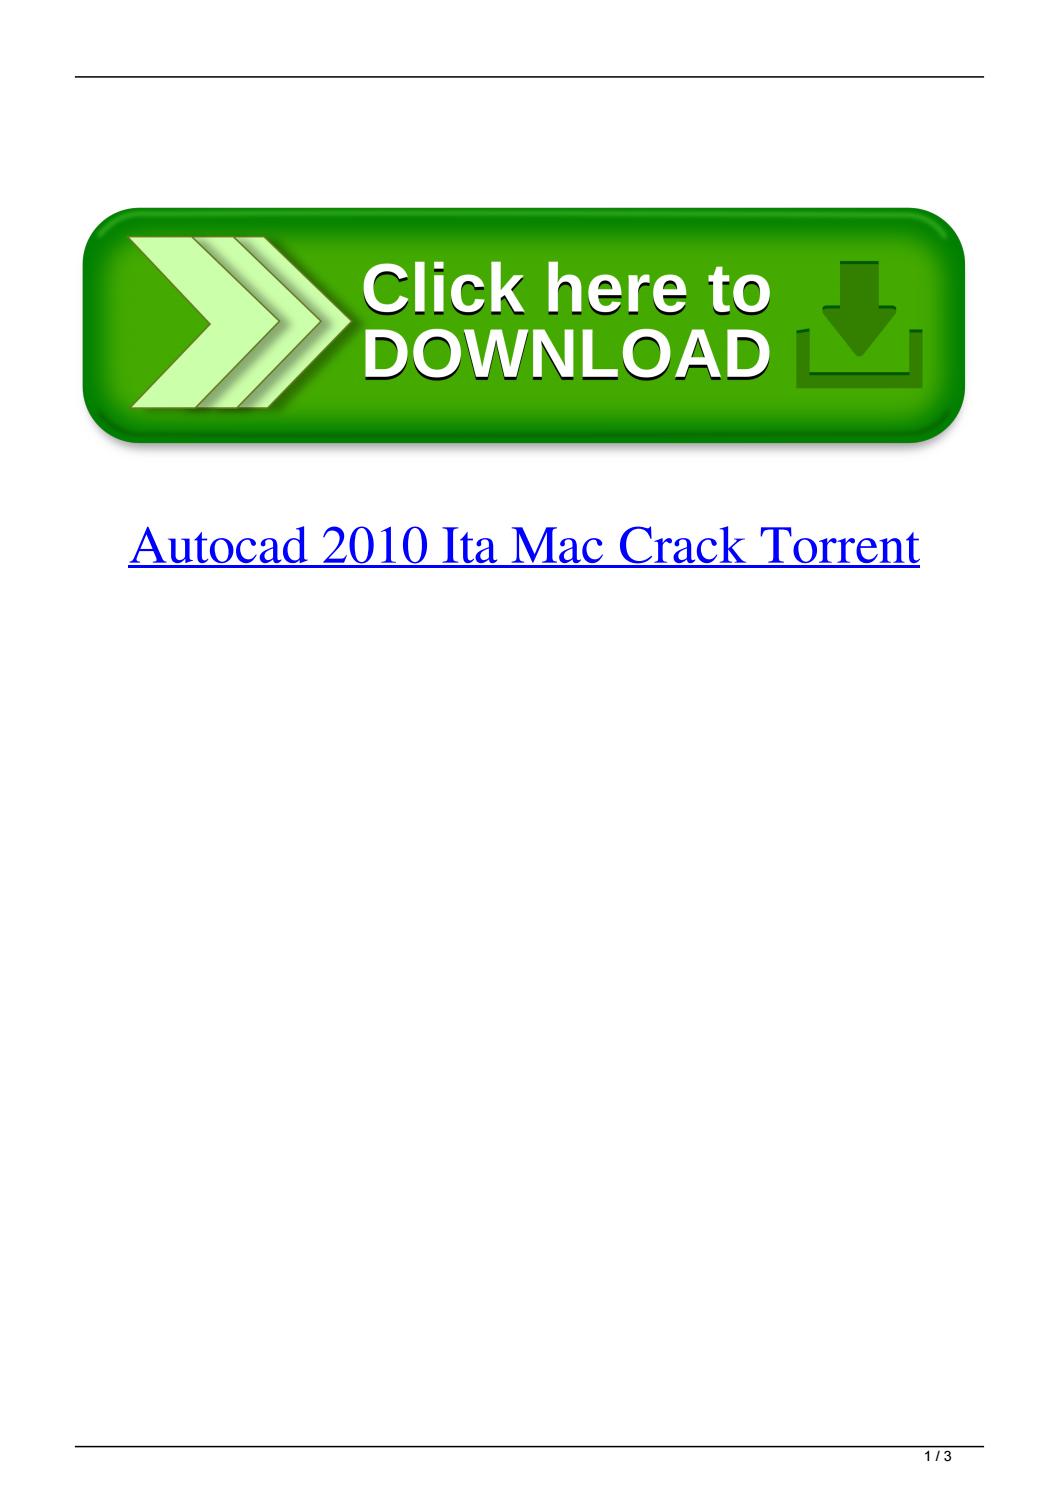 Autocad 2020 mac crack